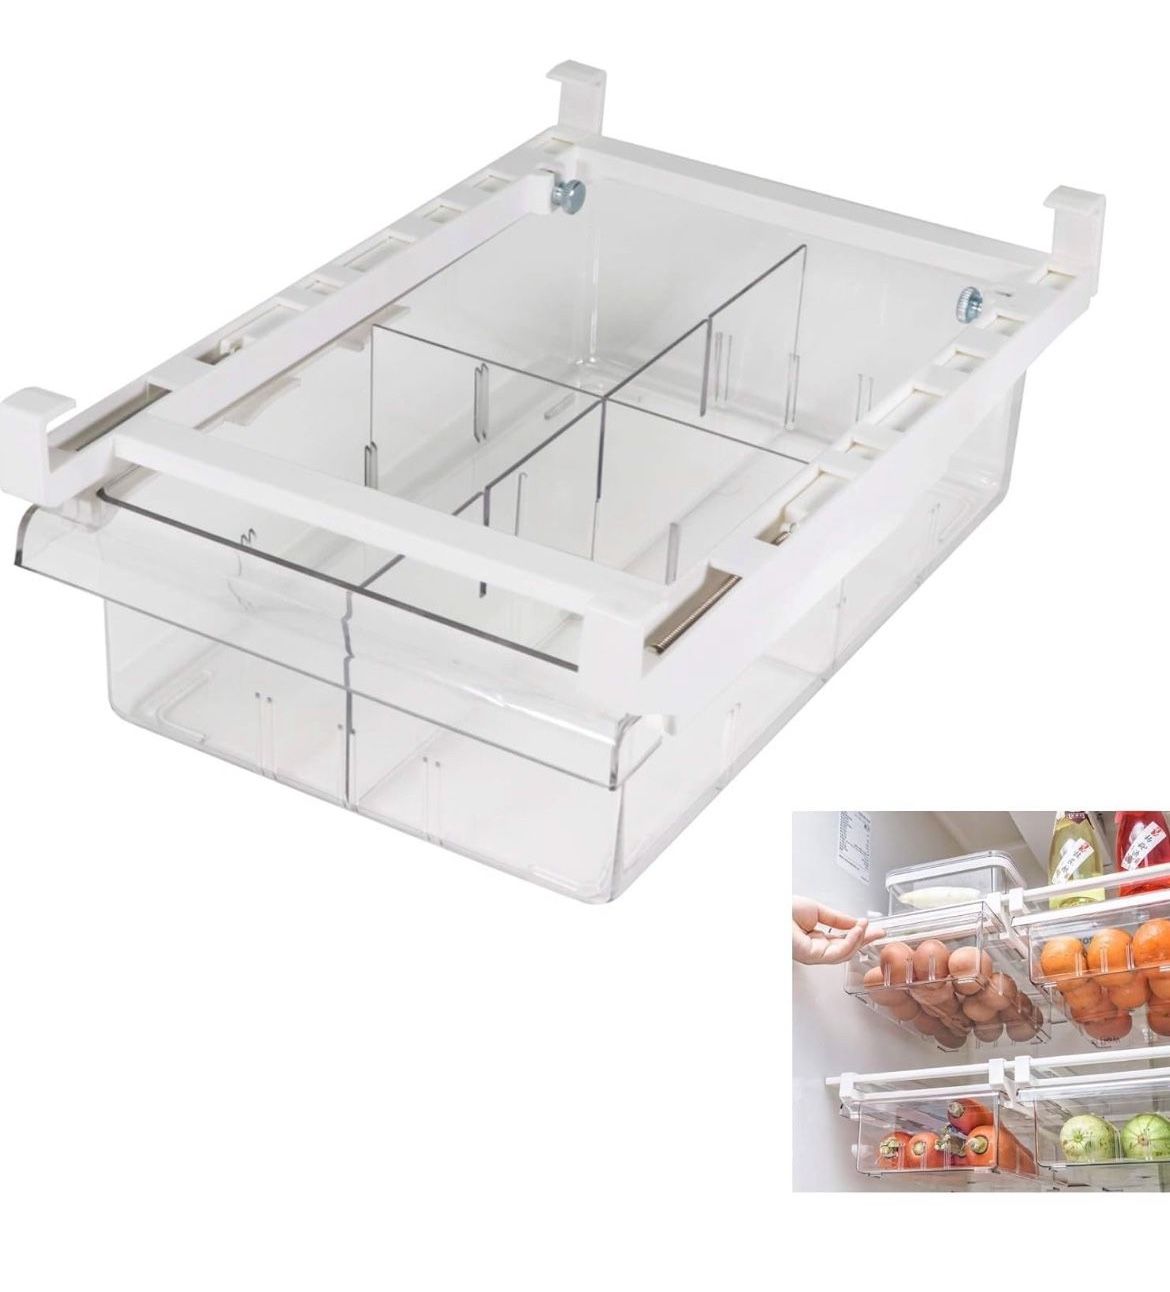 YekouMax Fridge Drawer Organizer, Refrigerator Organizer Bins, Pull Out with Handle, Fridge Shelf Holder Storage Box, Clear Container for Food,Drinks,